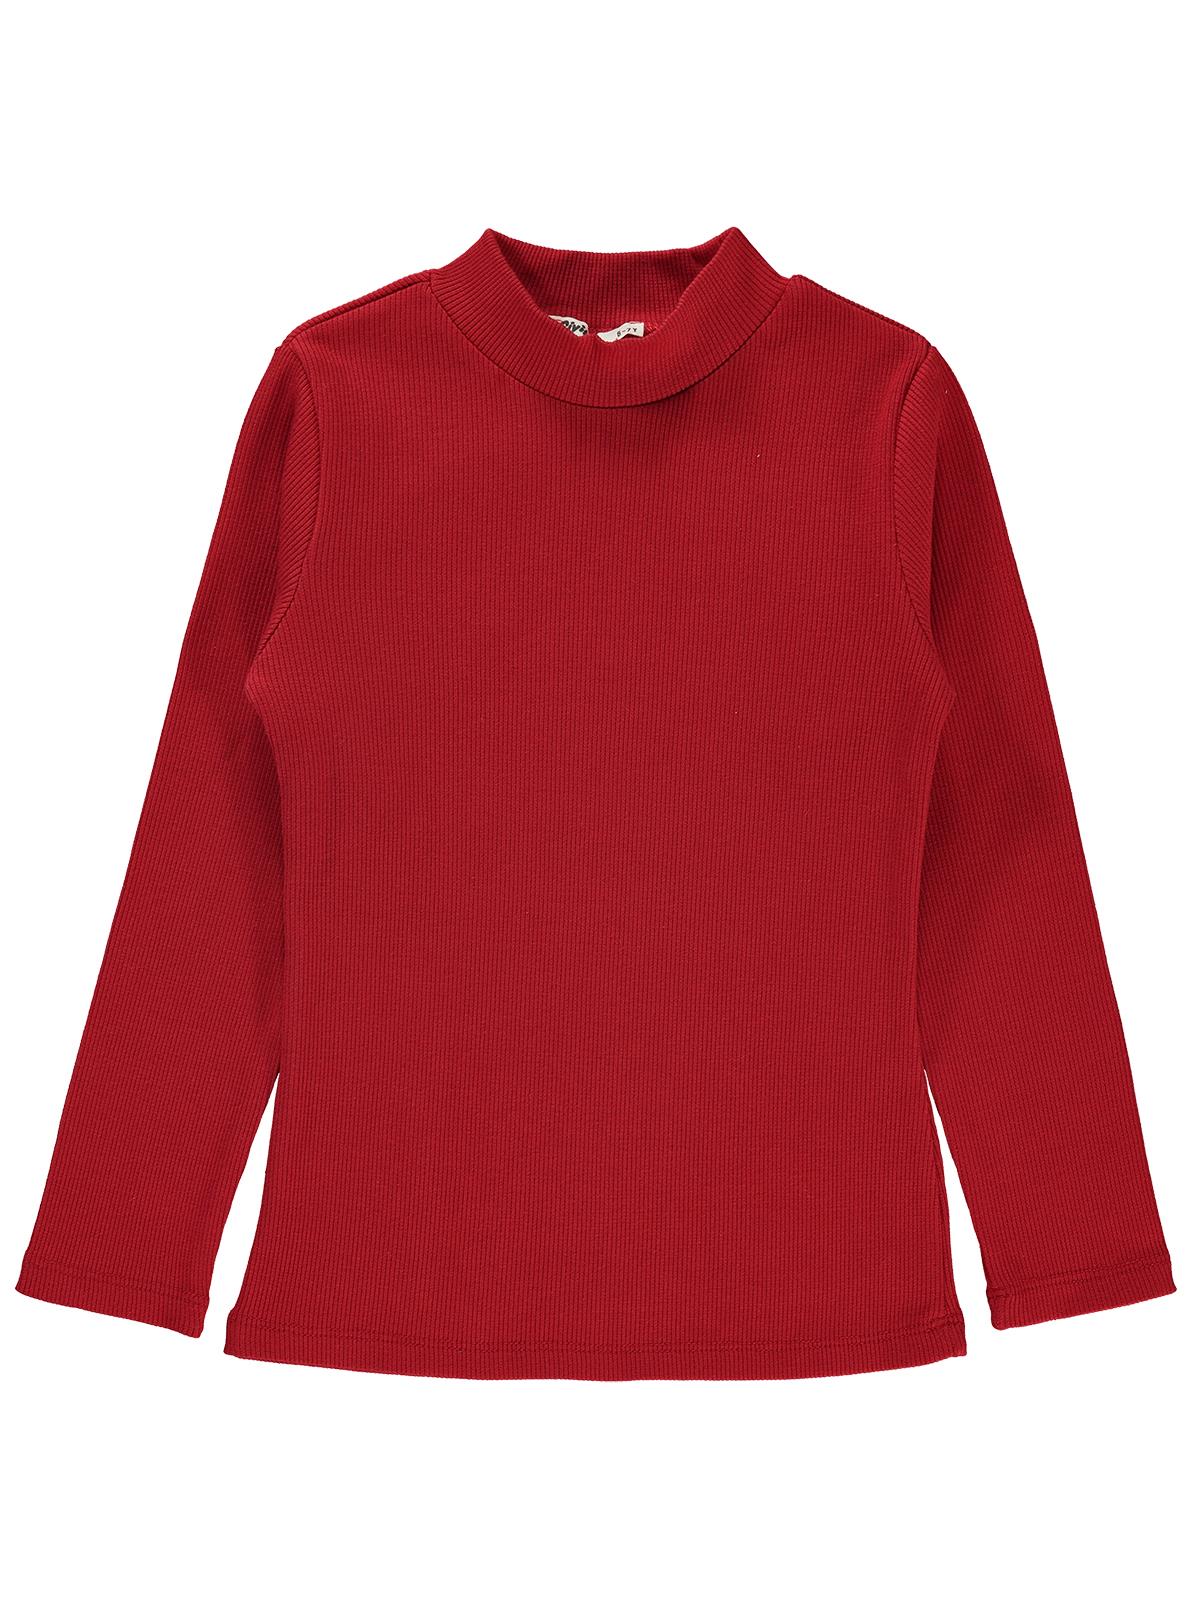 Civil Girls Kız Çocuk Sweatshirt 6-9 Yaş Kırmızı